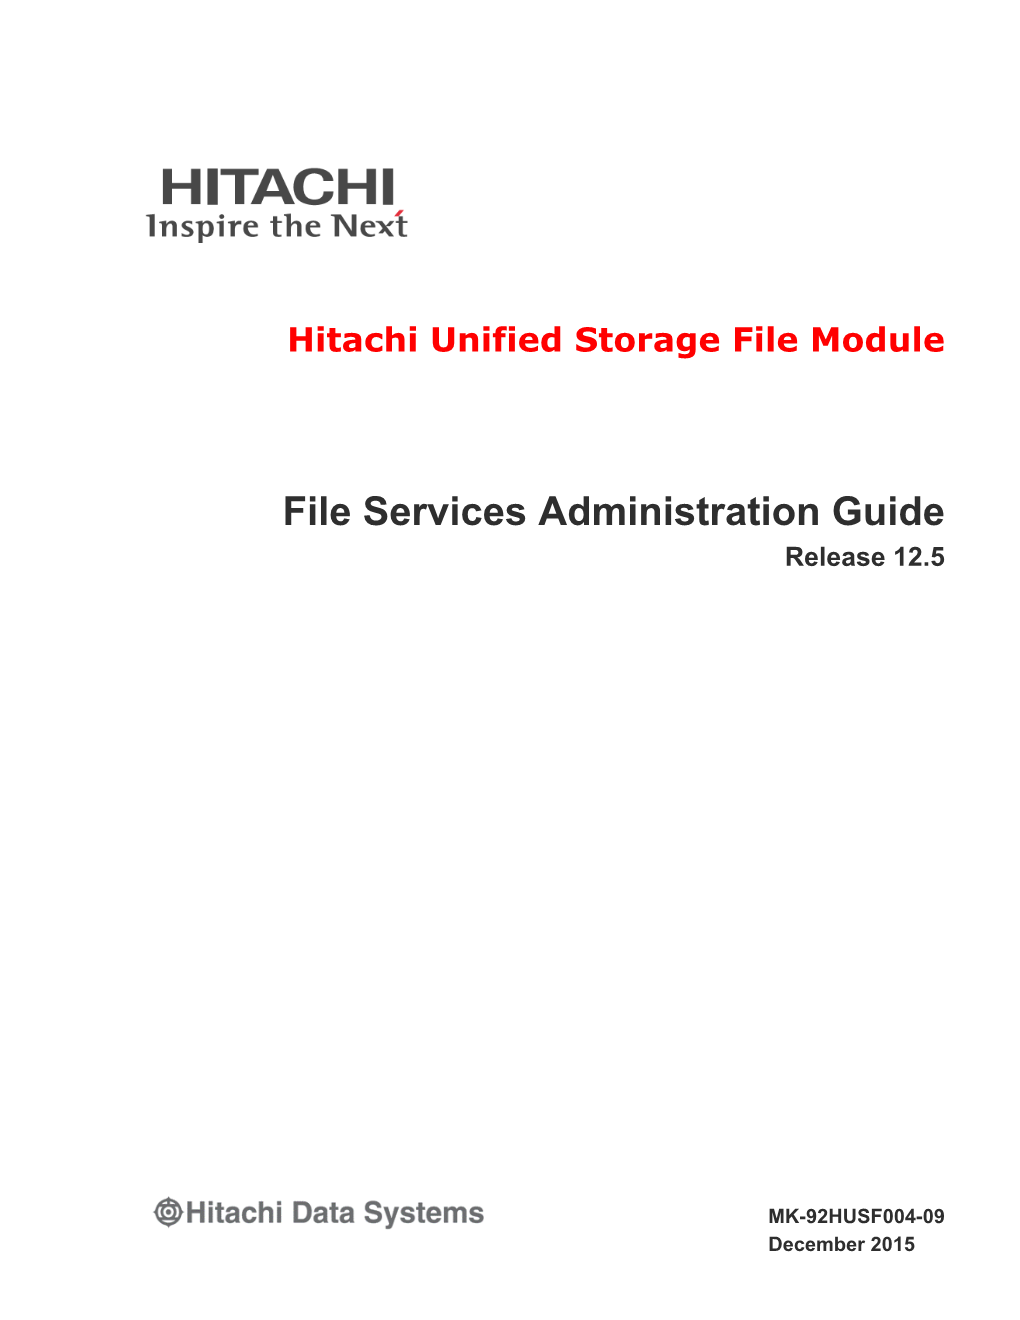 Hitachi Unified Storage File Module File Services Administration Guide